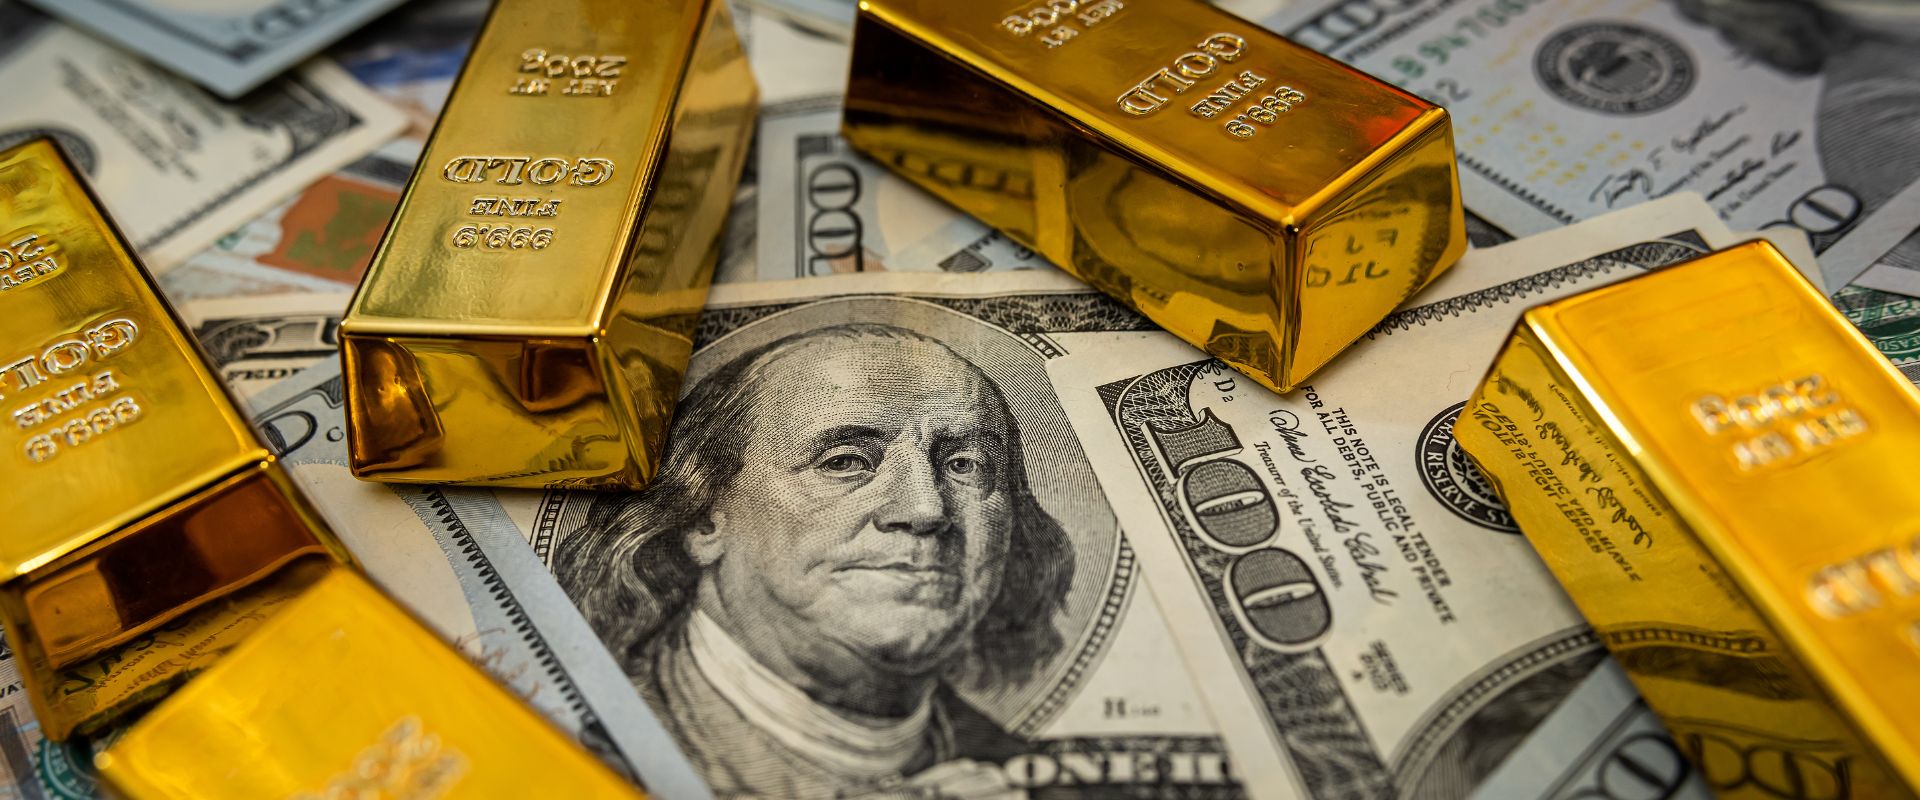 gold bullion on pile of US dollar bills as background